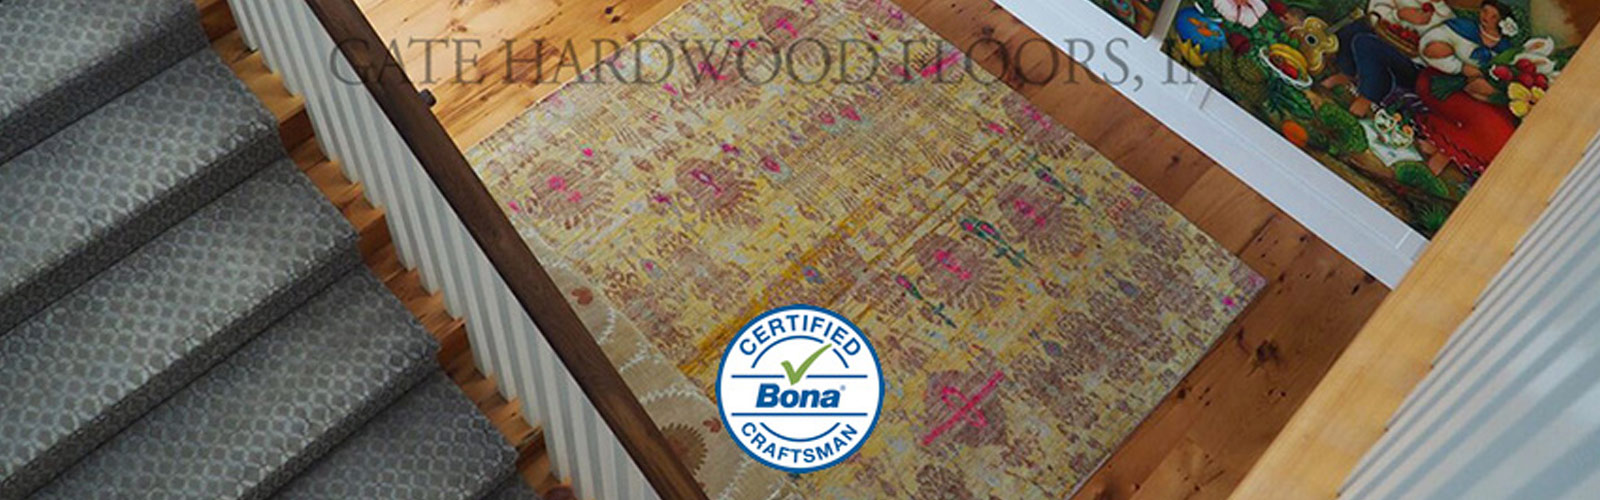 Gäte Hardwood Floors Bona Certified, Hardwood Floor Refinishing Orange County Ca